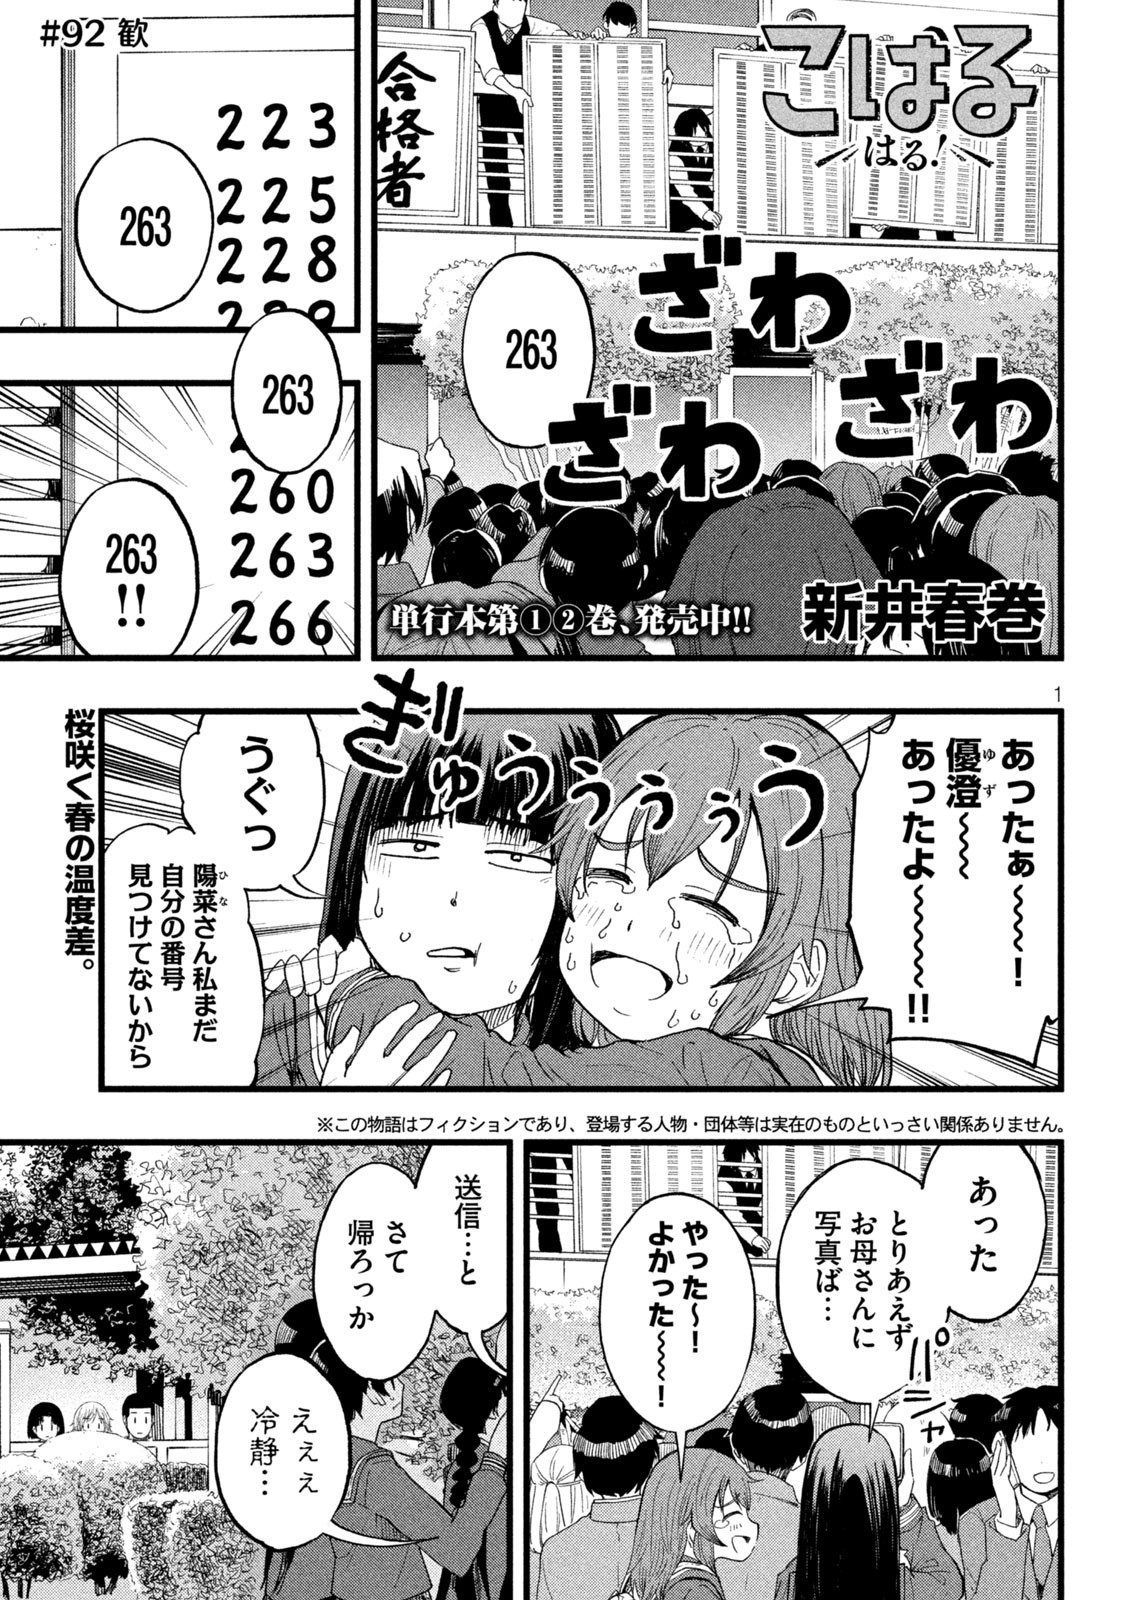 Koharu haru! - Chapter 92 - Page 1